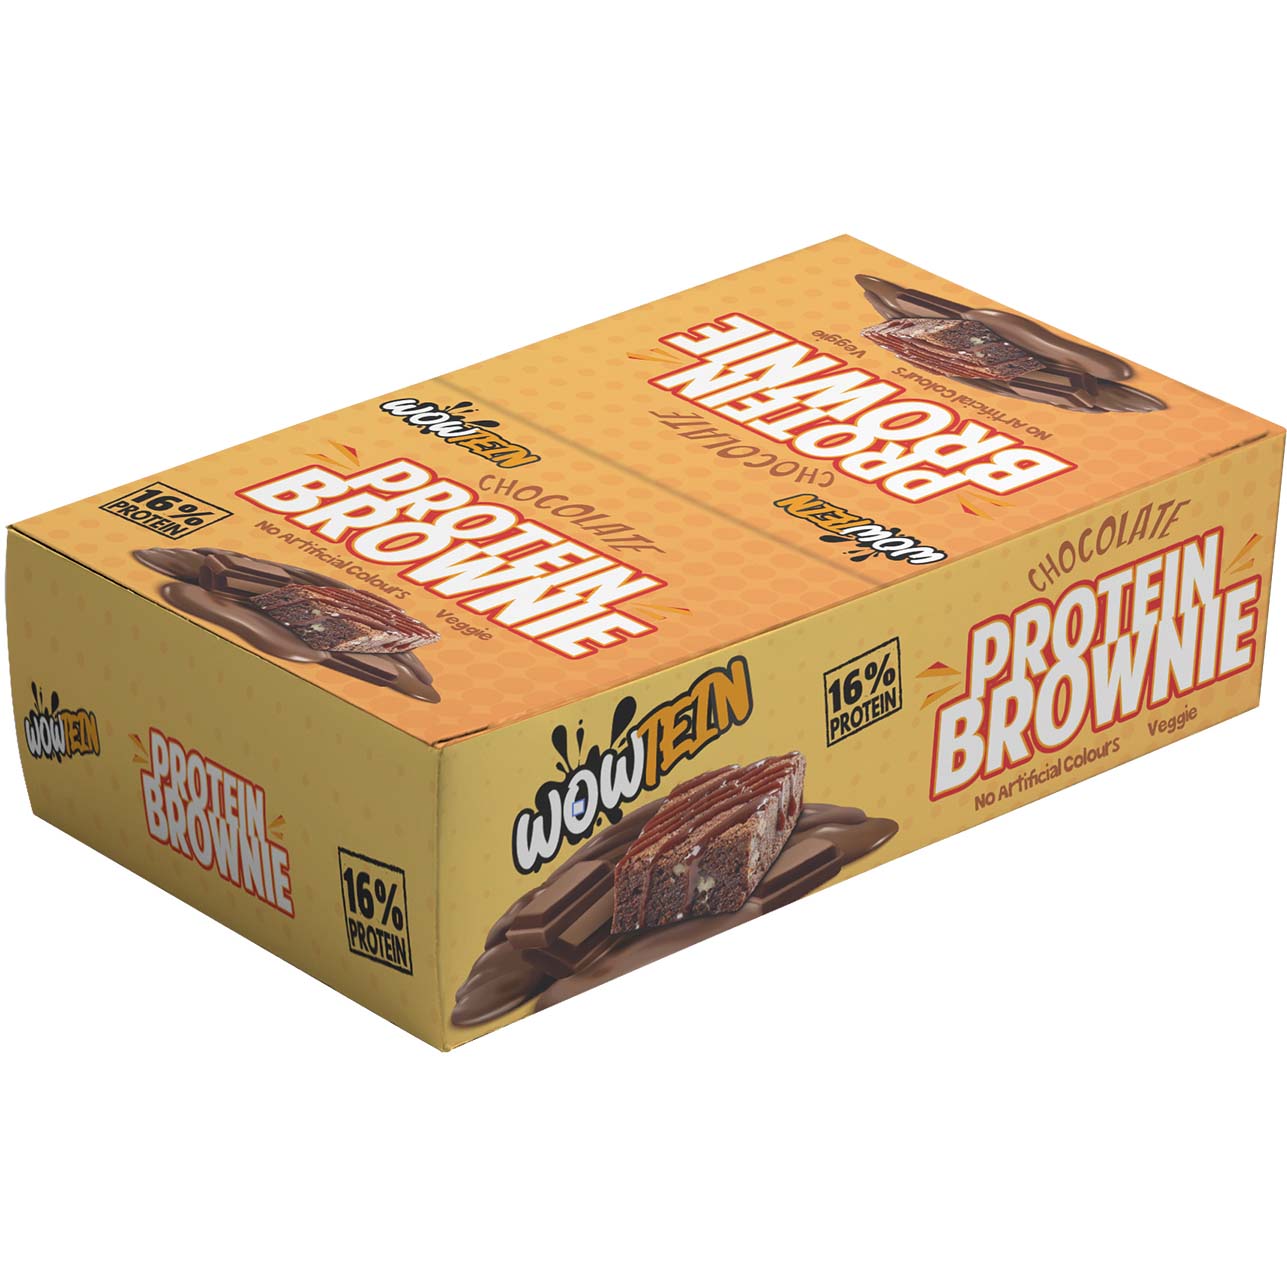 Wowtein Chocolate Brownie Protein, Chocolate Brownie, Box of 10 Bars